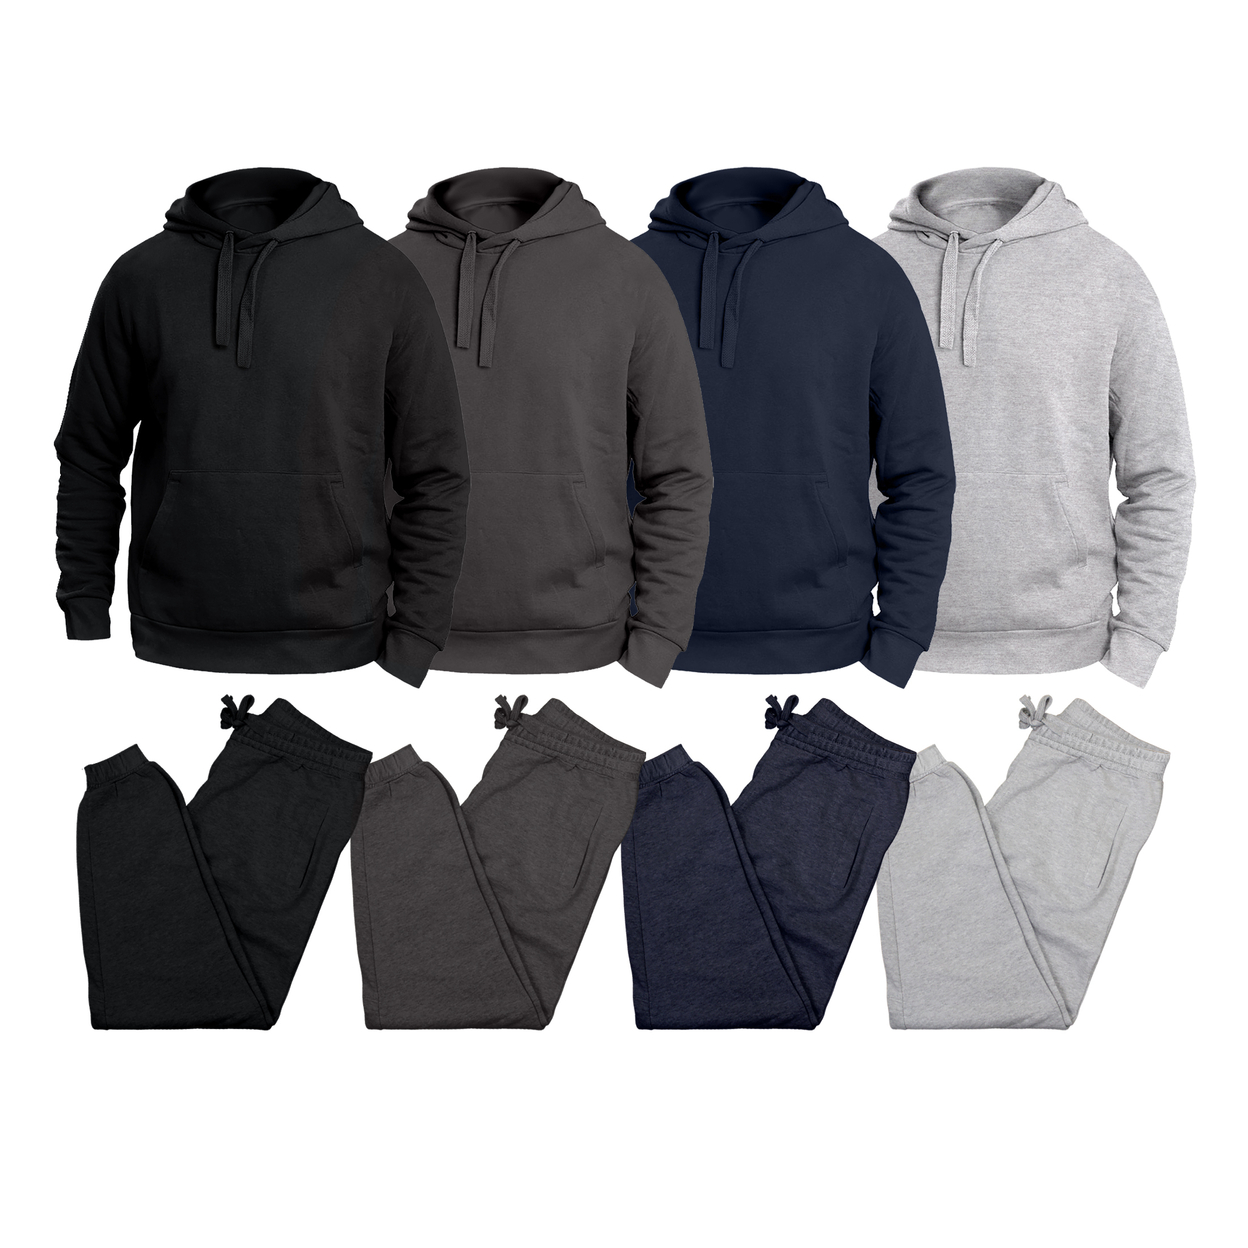 Men's Big & Tall Winter Warm Cozy Athletic Fleece Lined Multi-Pocket Cargo Sweatsuit - Black, Medium